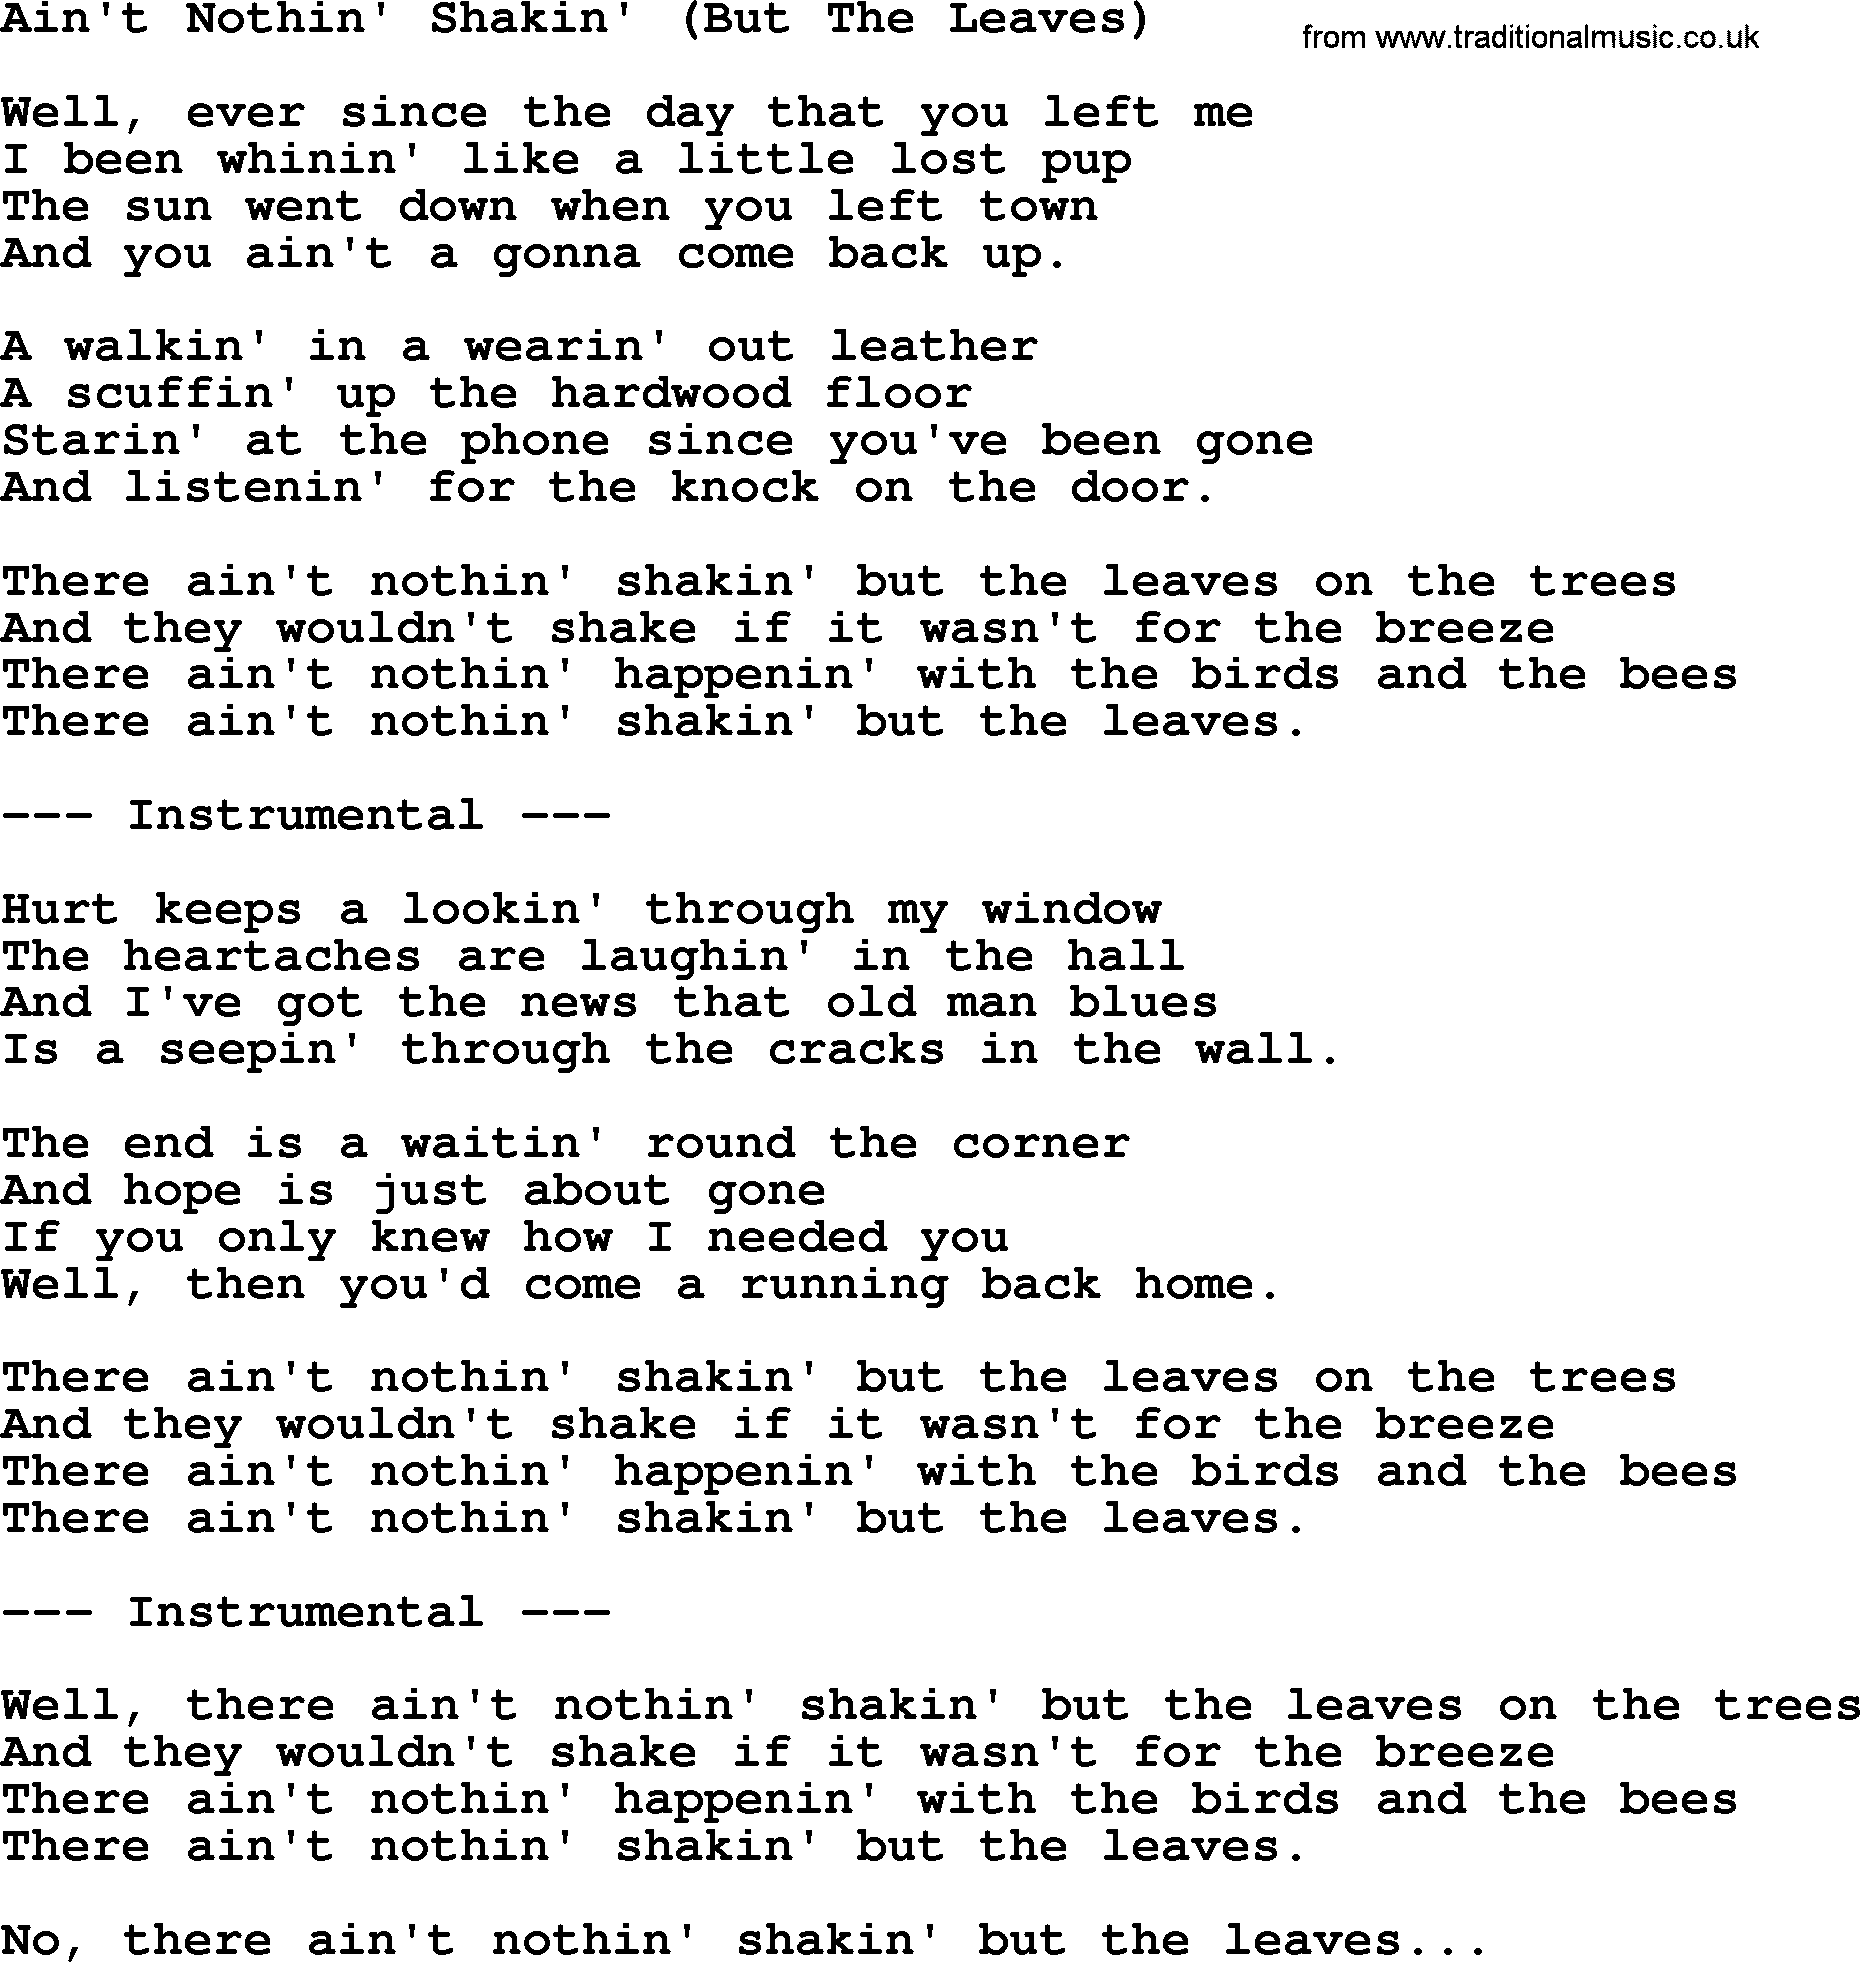 George Jones song: Ain't Nothin' Shakin' (but The Leaves), lyrics